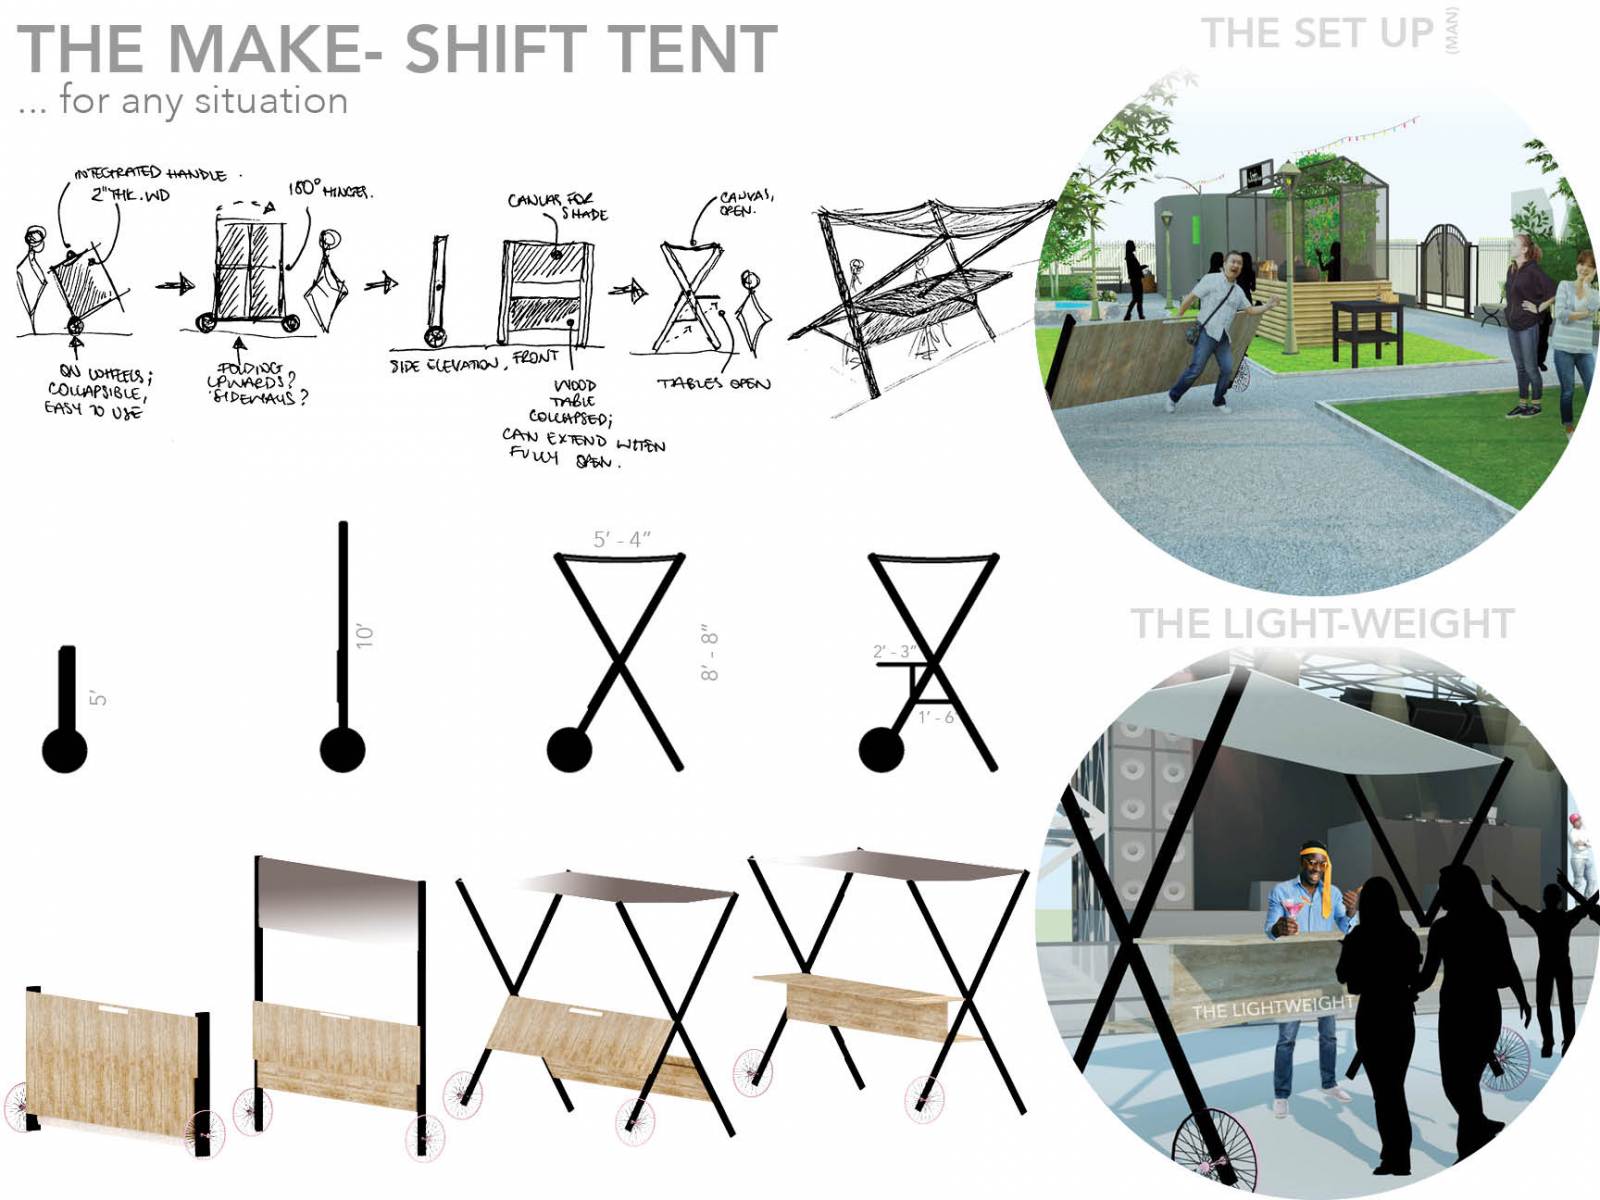 the make-shift tent